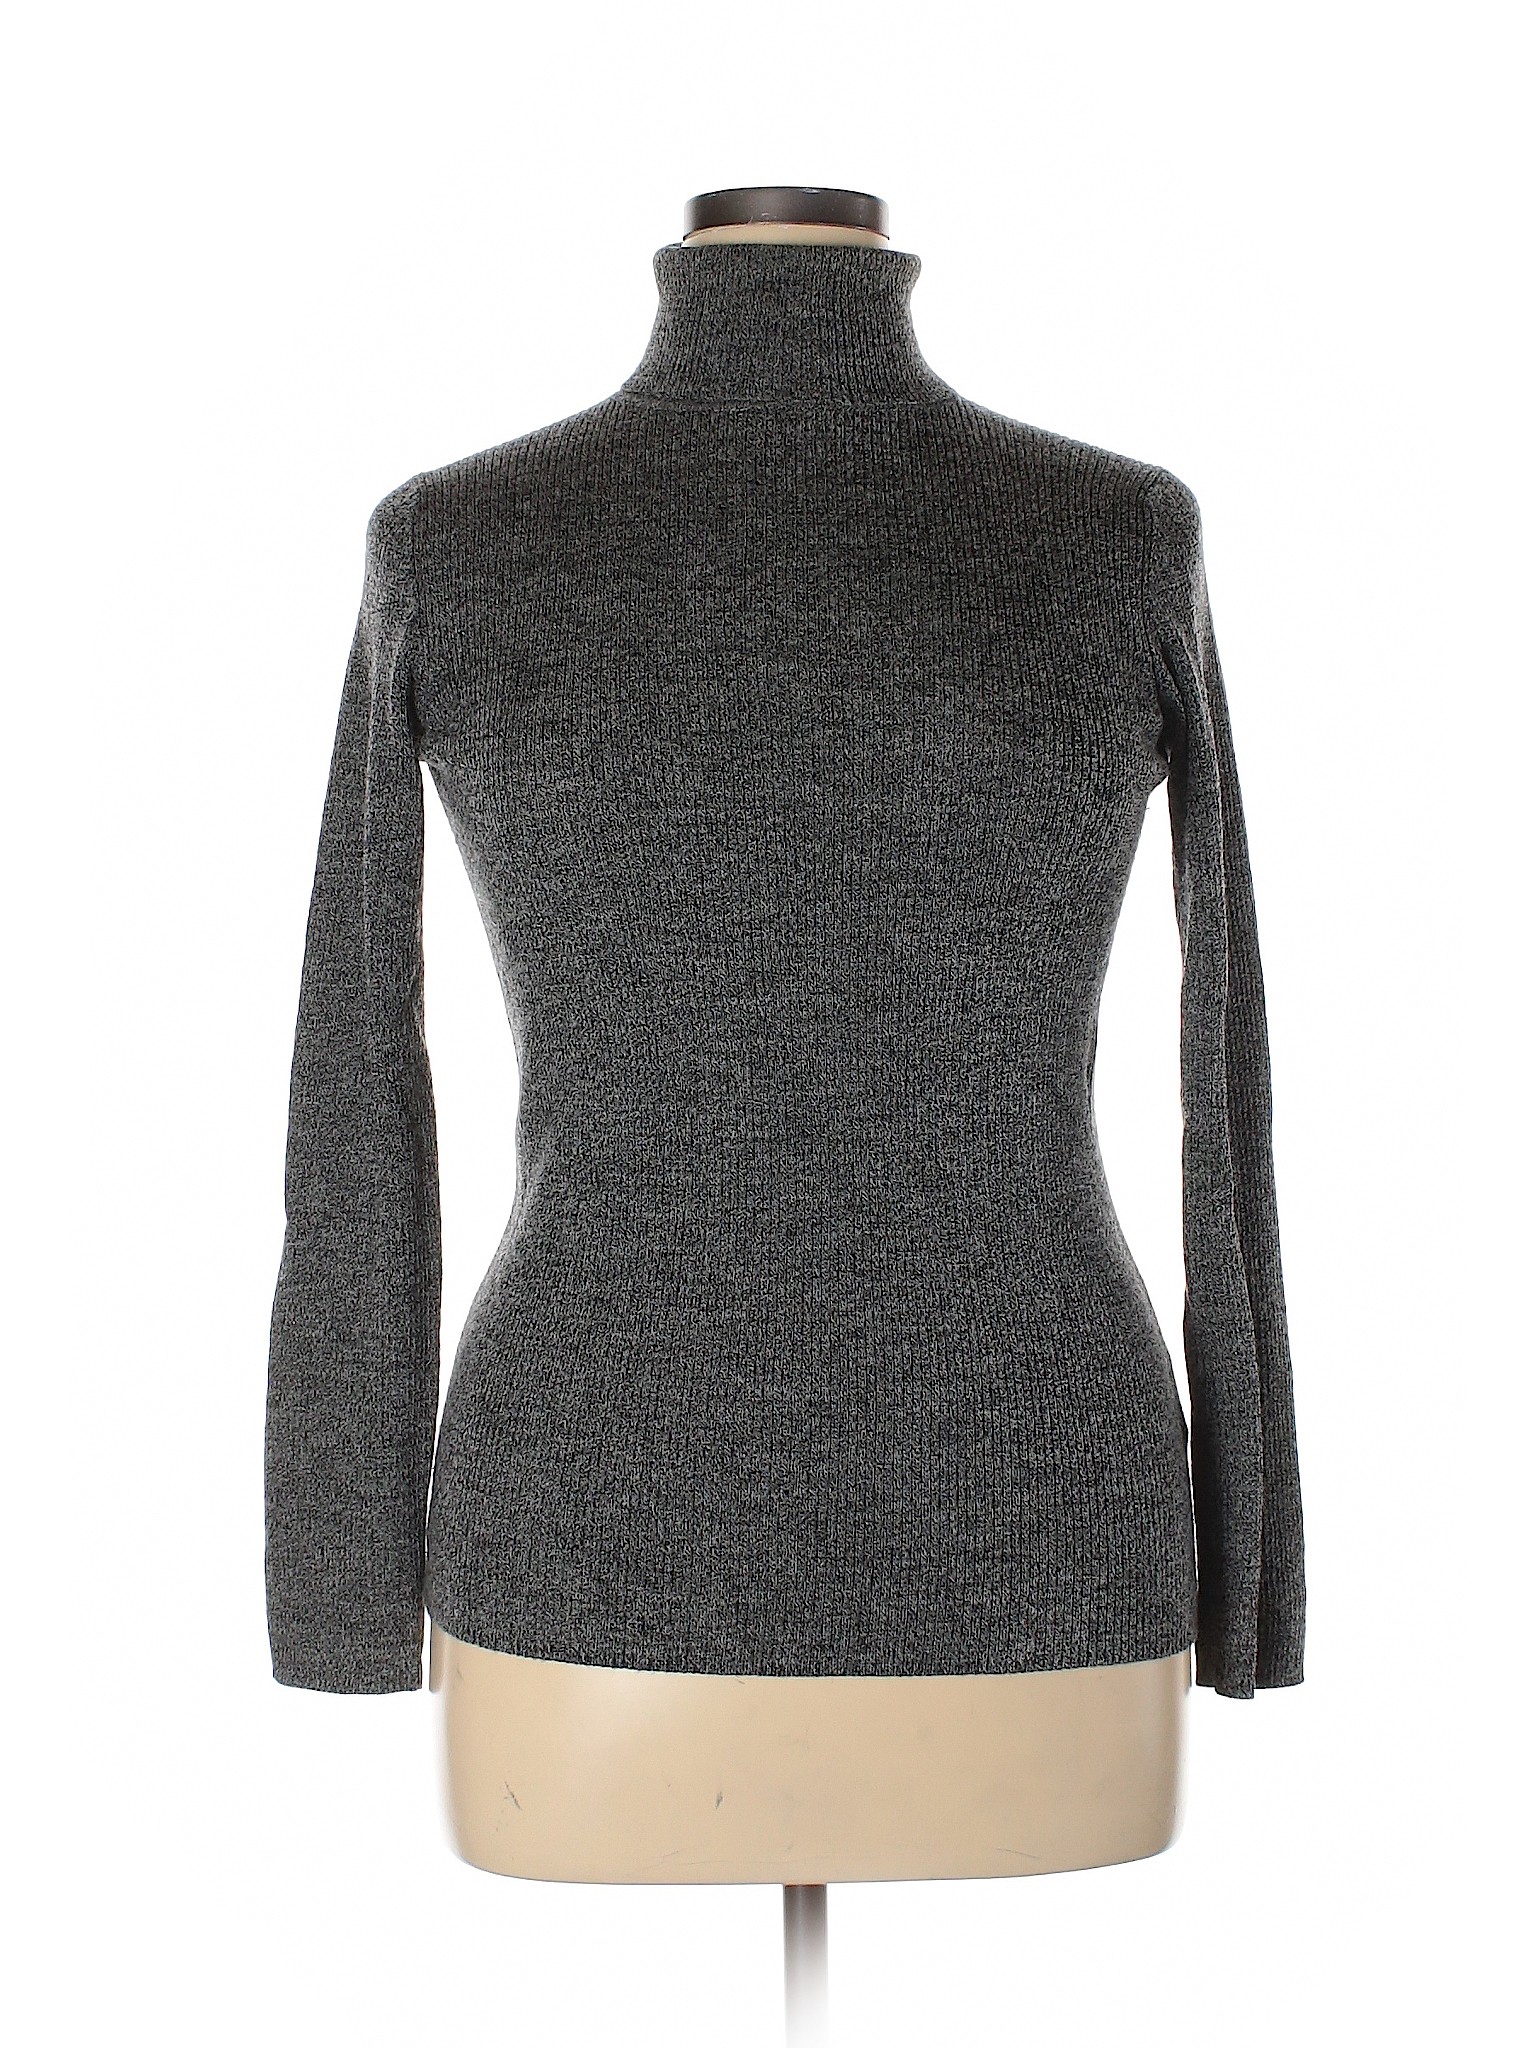  Uniqlo  Women Gray Turtleneck  Sweater XL eBay